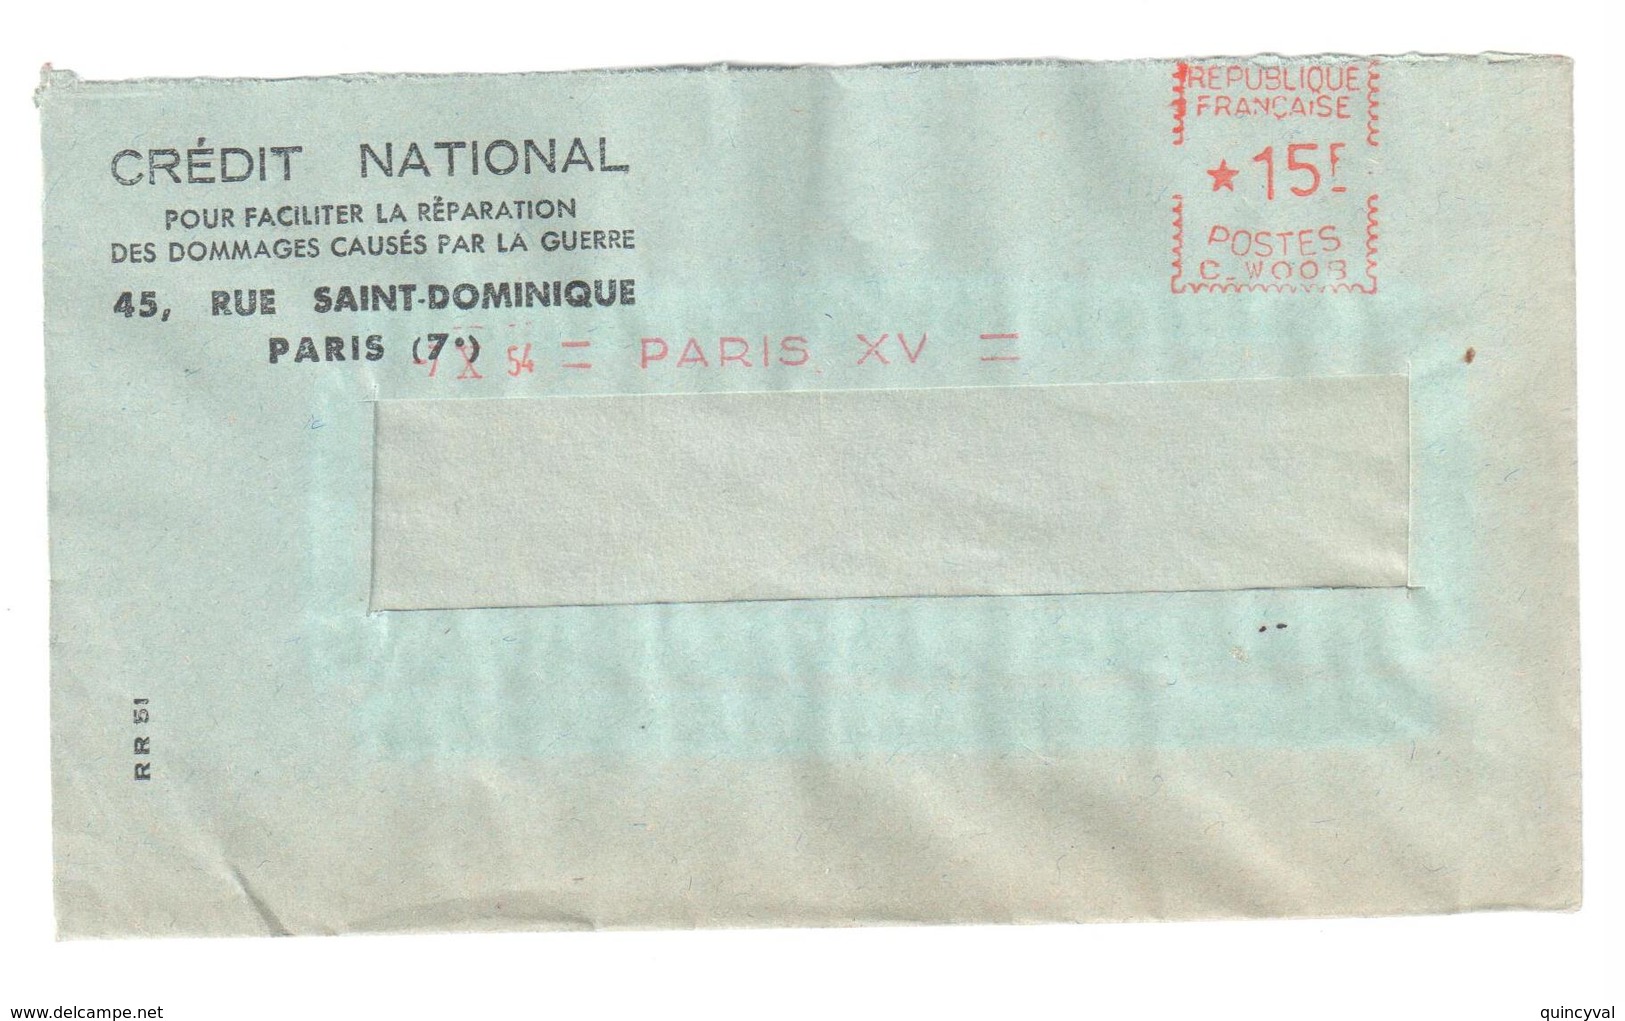 PARIS XV Lettre CREDIT NATIONAL Ob 7 10 1954 Lettre Simple EMA REMPLACEMENT C W 008 15 F - EMA (Print Machine)